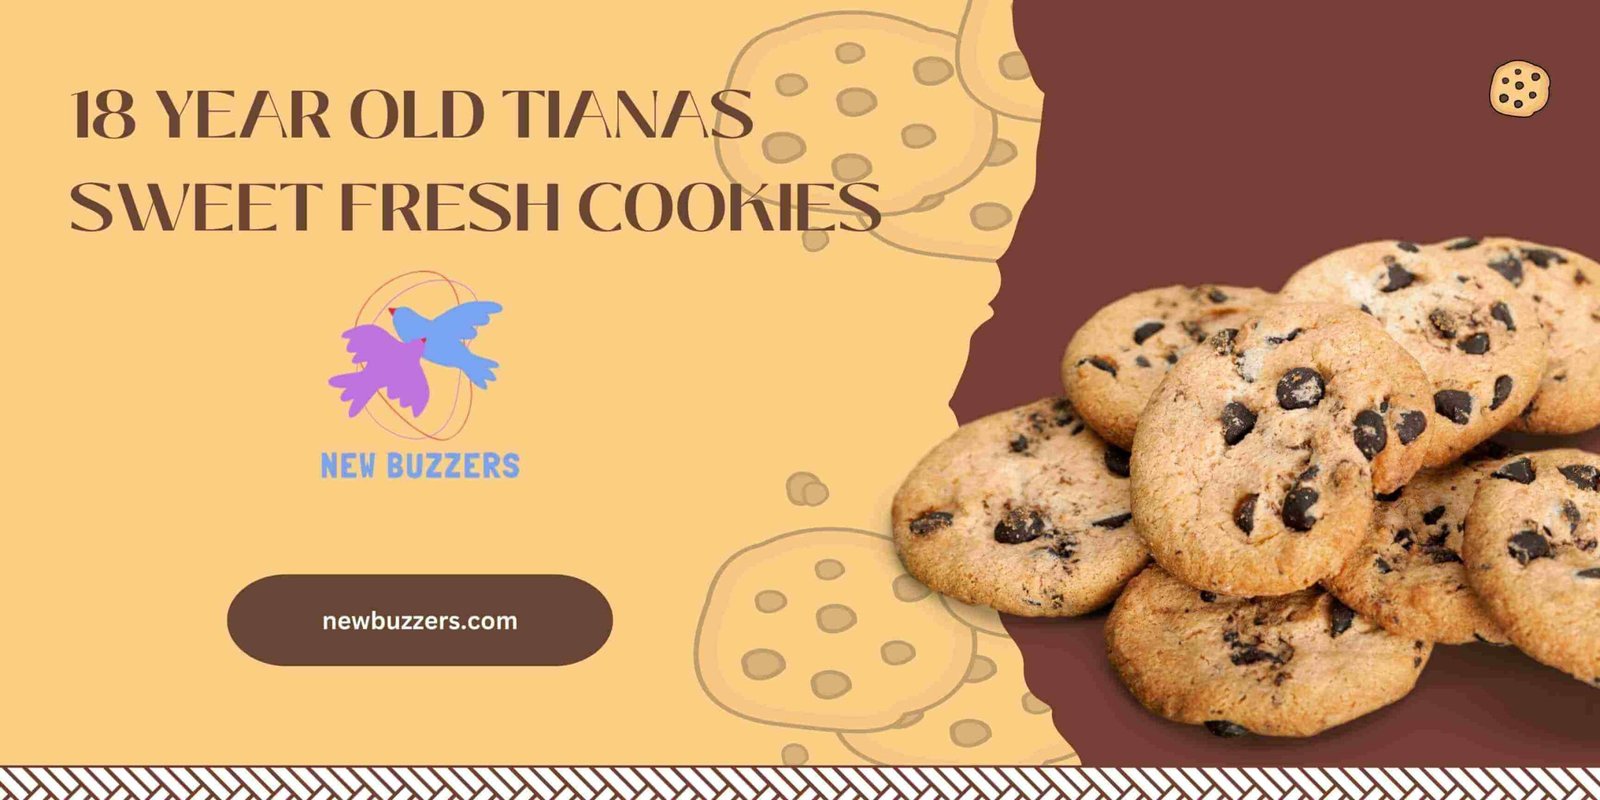 18 Year Old Tianas Sweet Fresh Cookies - Newbuzzers